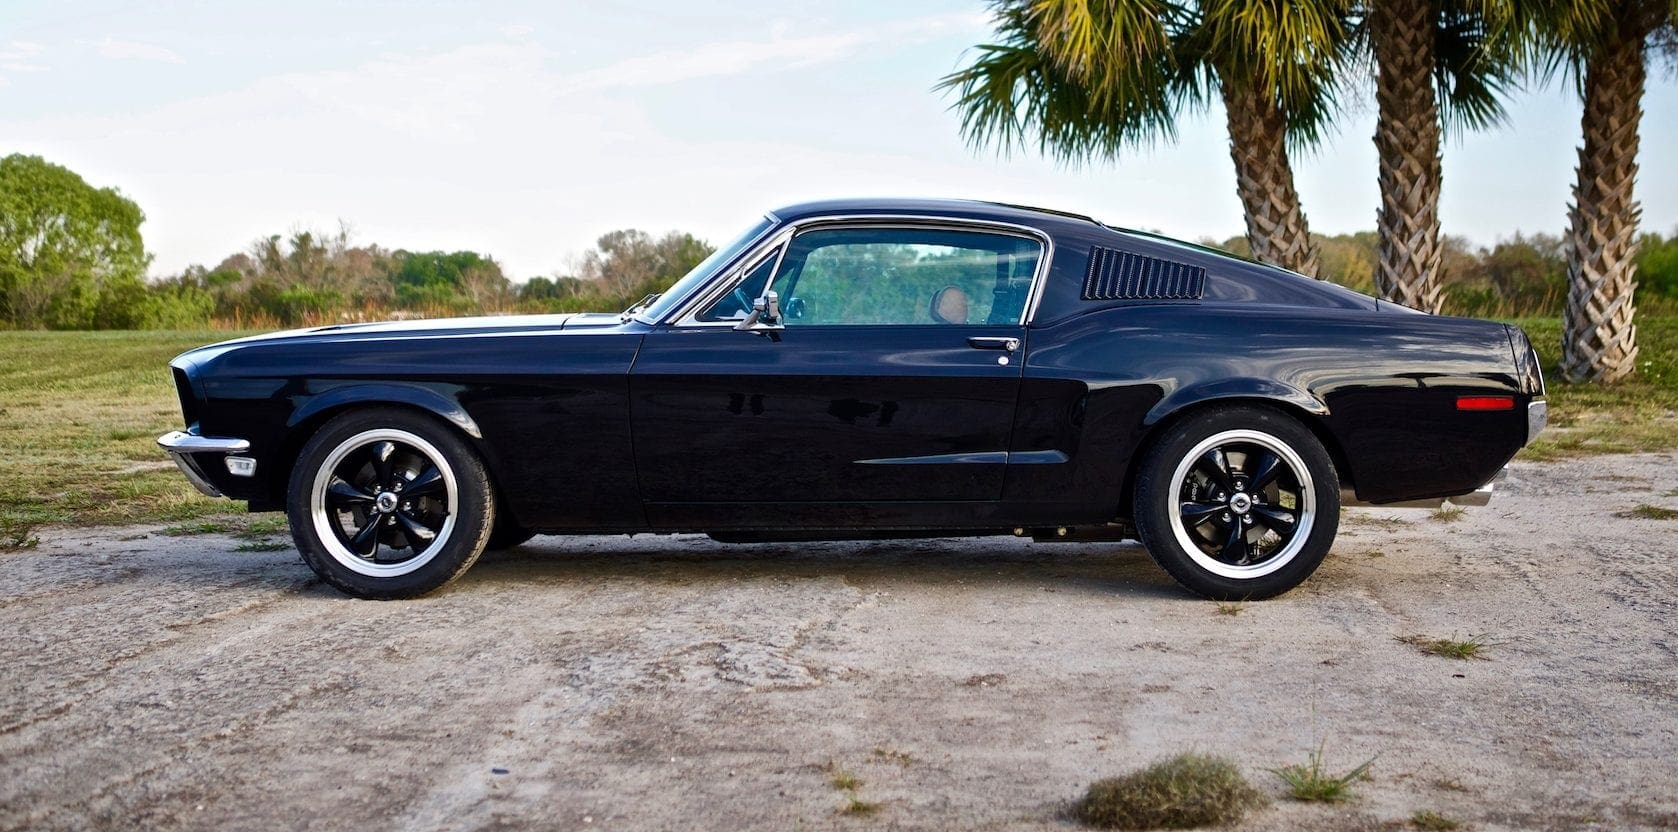 1968 Mustang GT 2+2 Fastback - Revology Cars